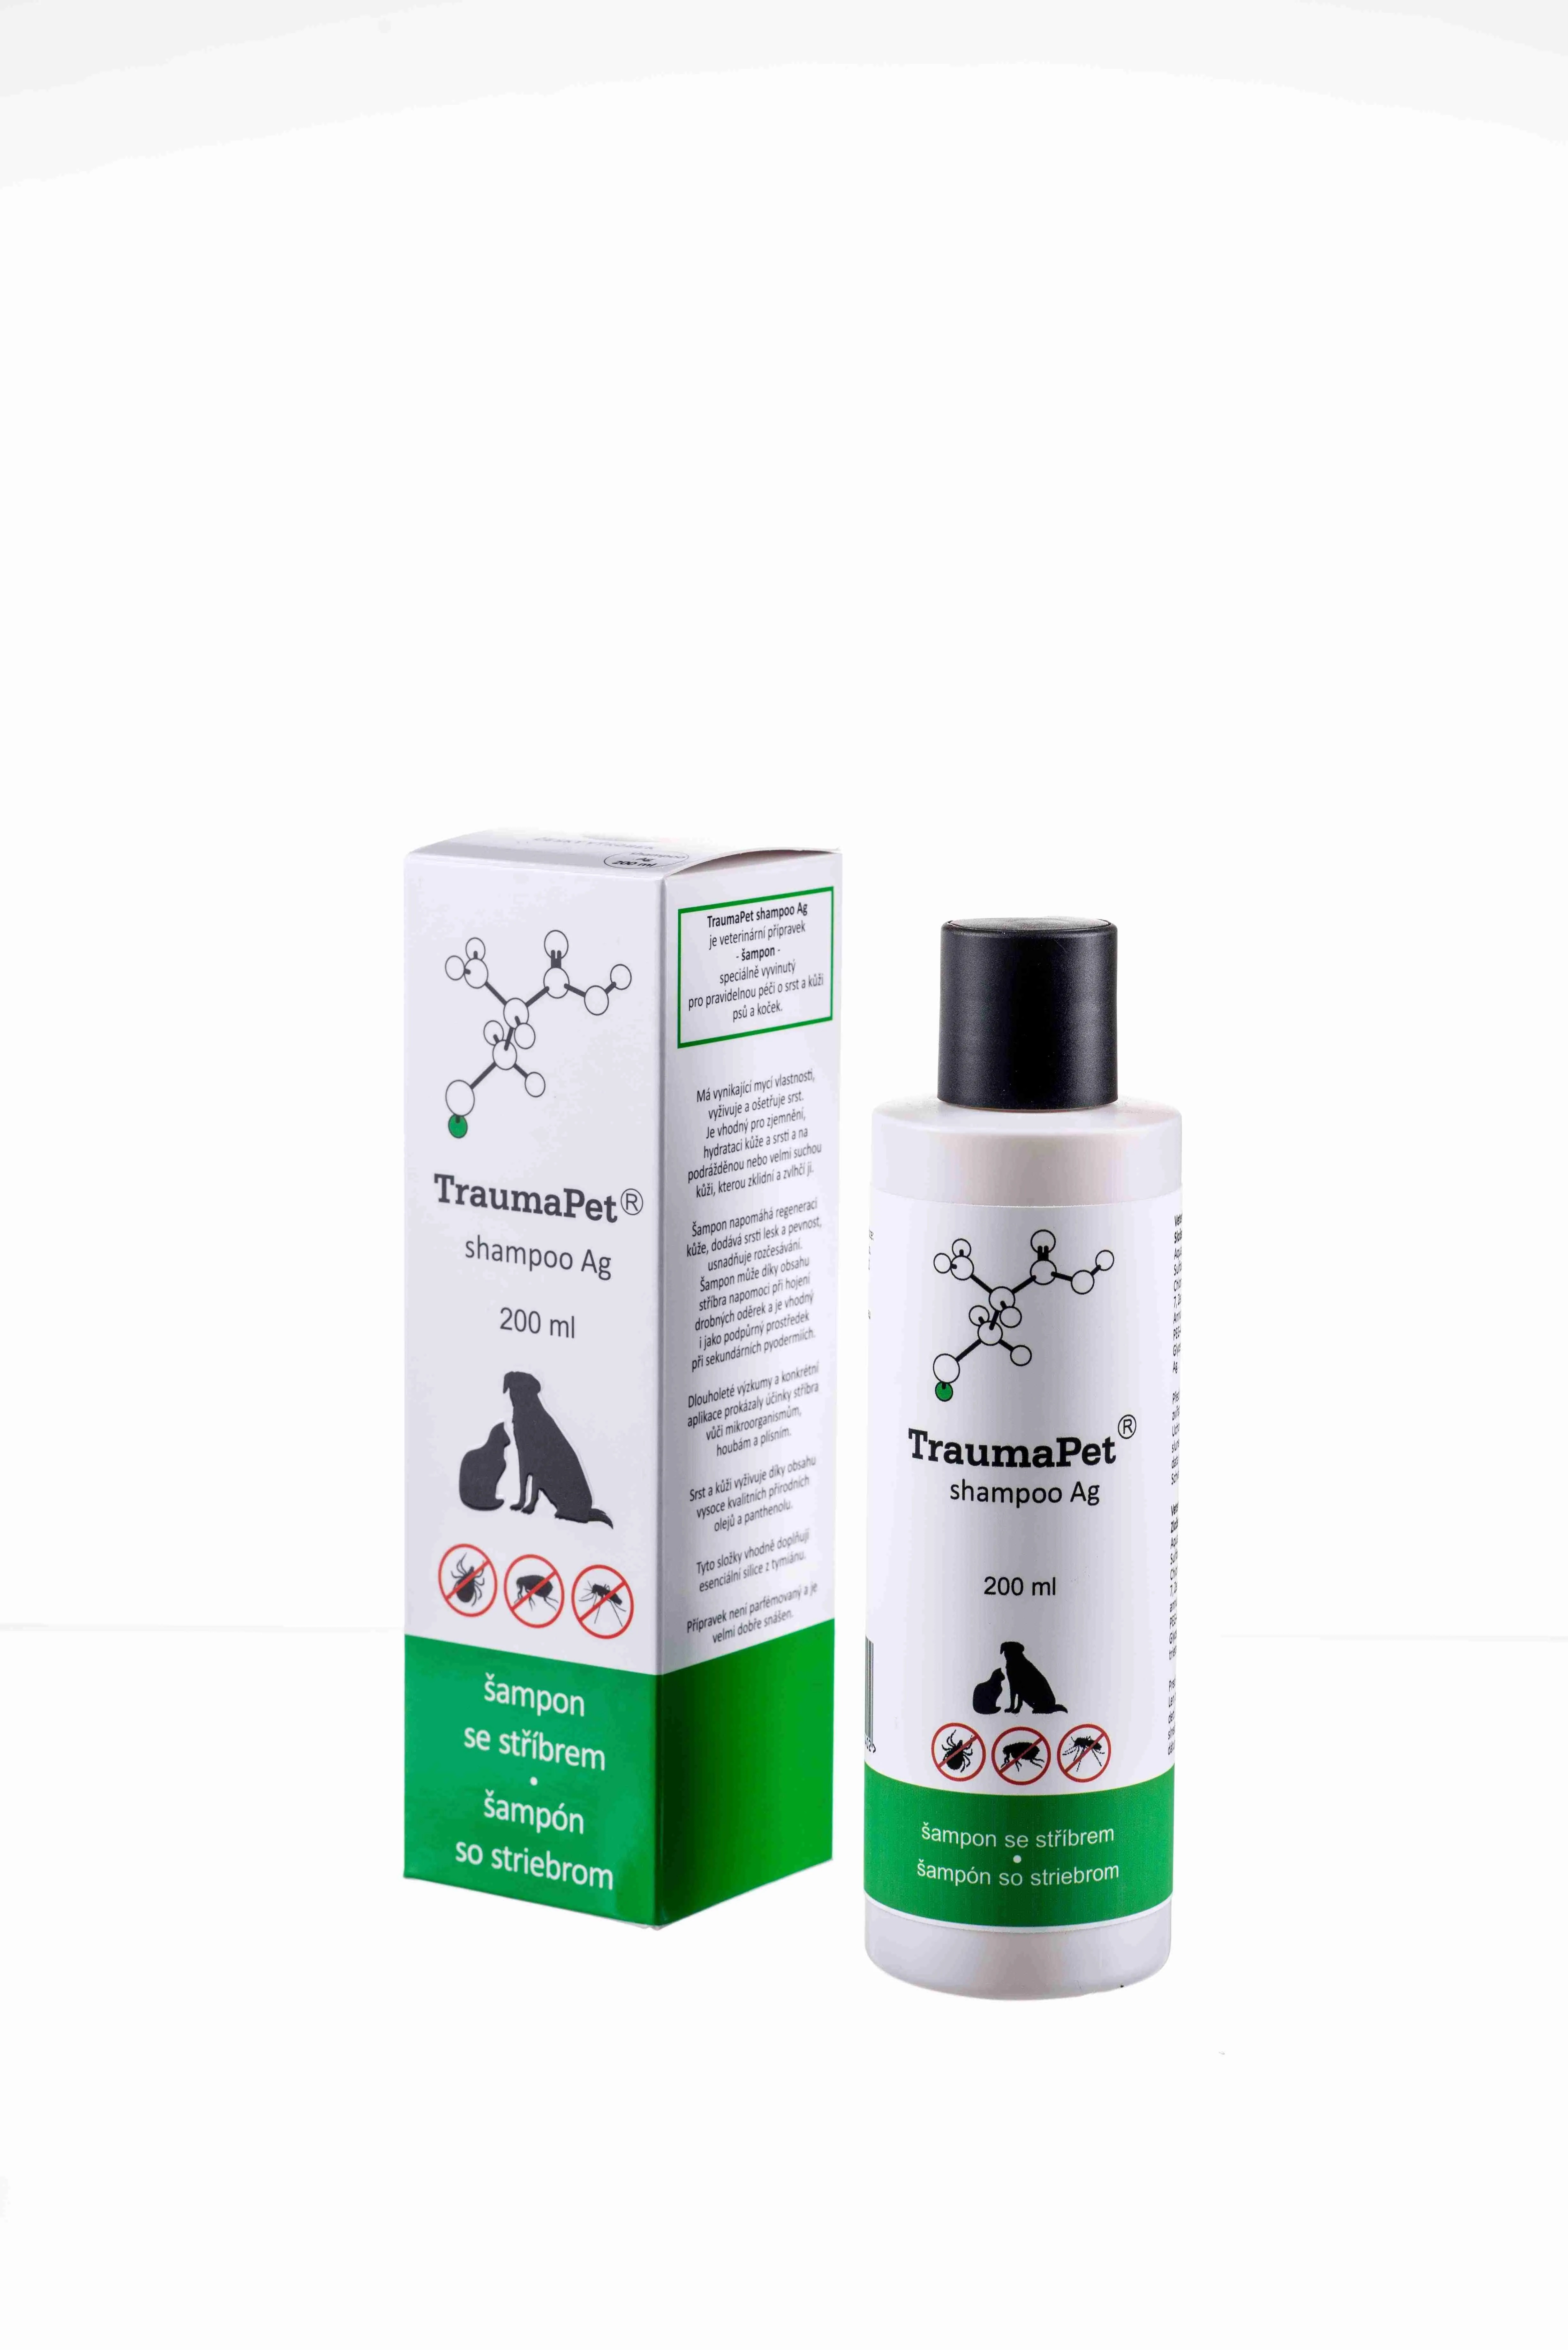 TraumaPet shampoo Ag 200 ml 1×200 ml, šampón